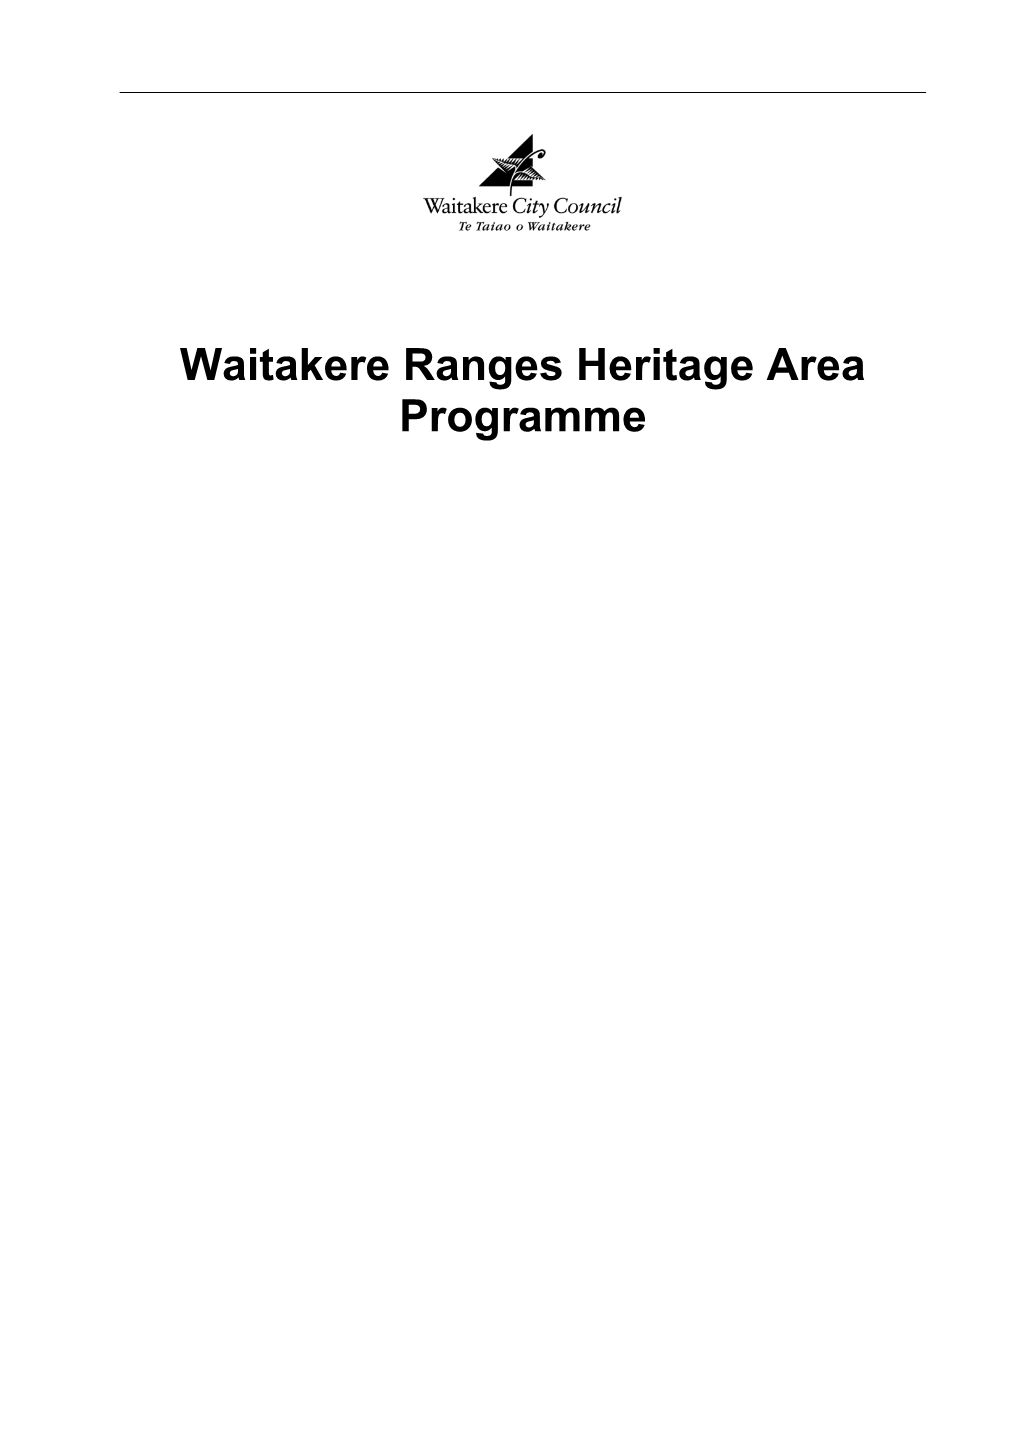 Waitakere Ranges Heritage Area Programme